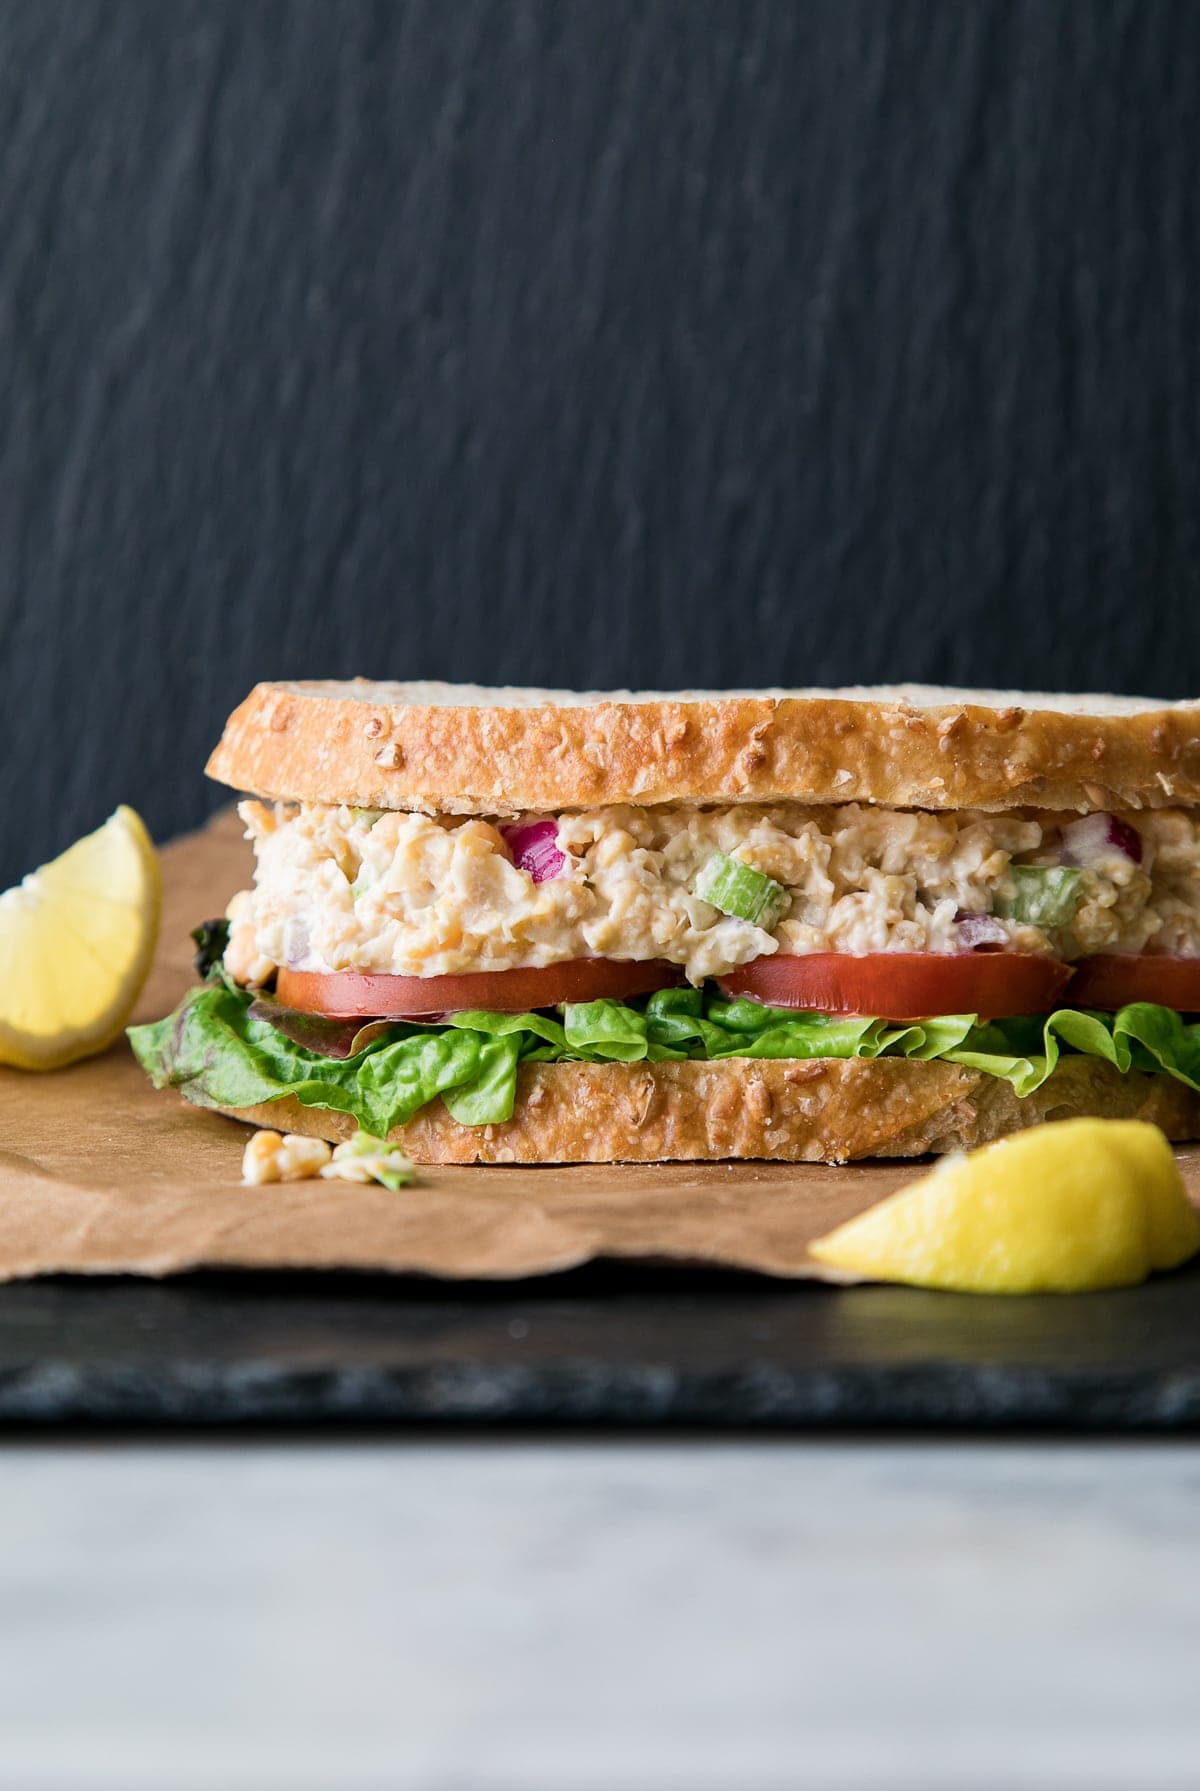 To tuna sandwich make how Tuna Sandwich